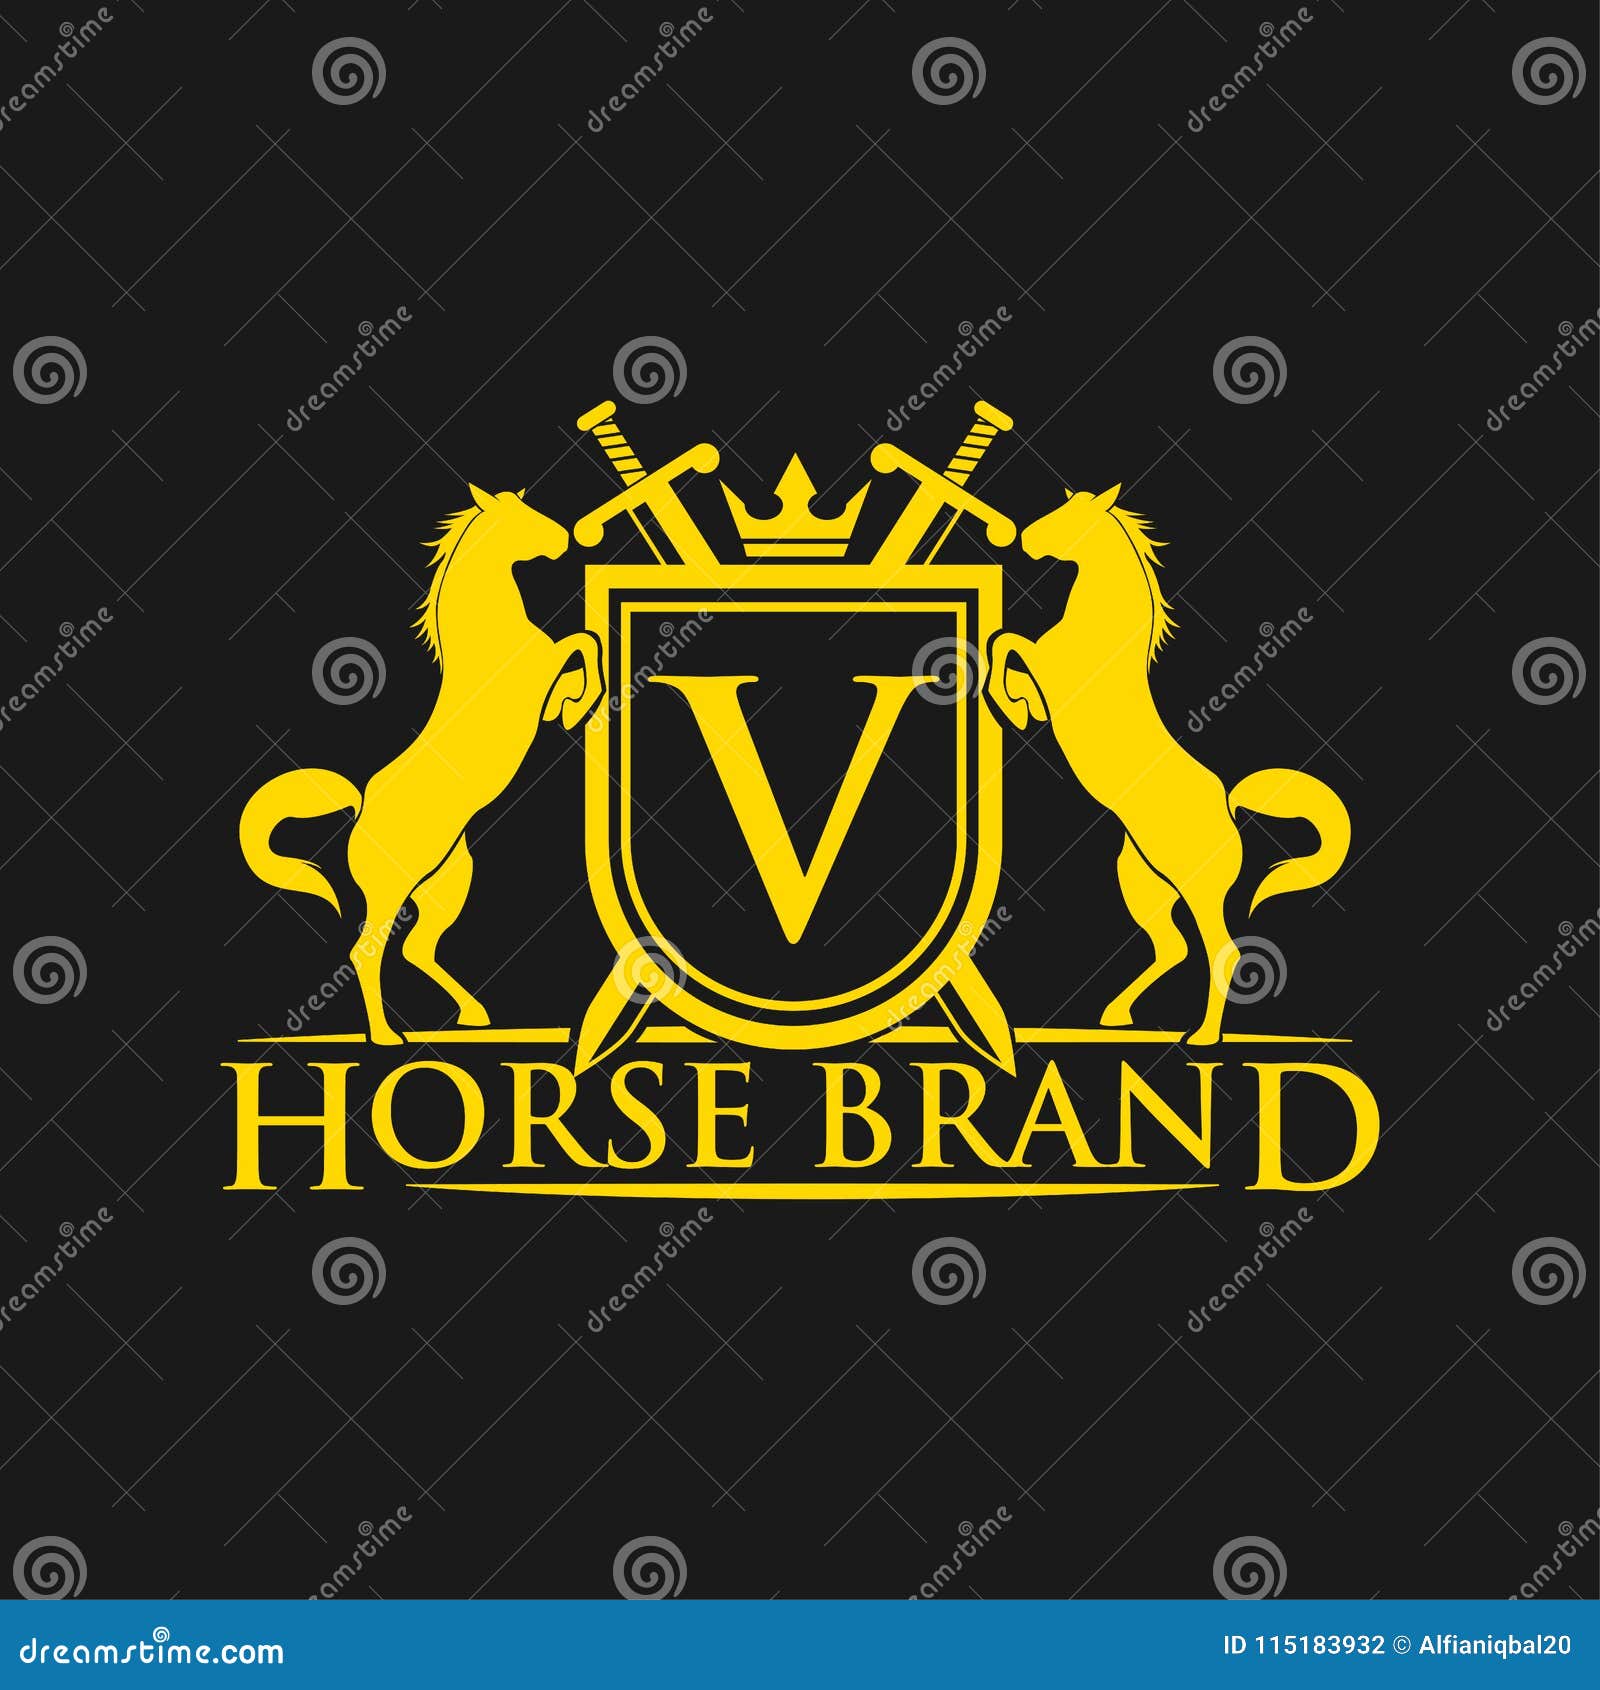 Letter VL logo with Luxury Gold template. Elegance logo vector